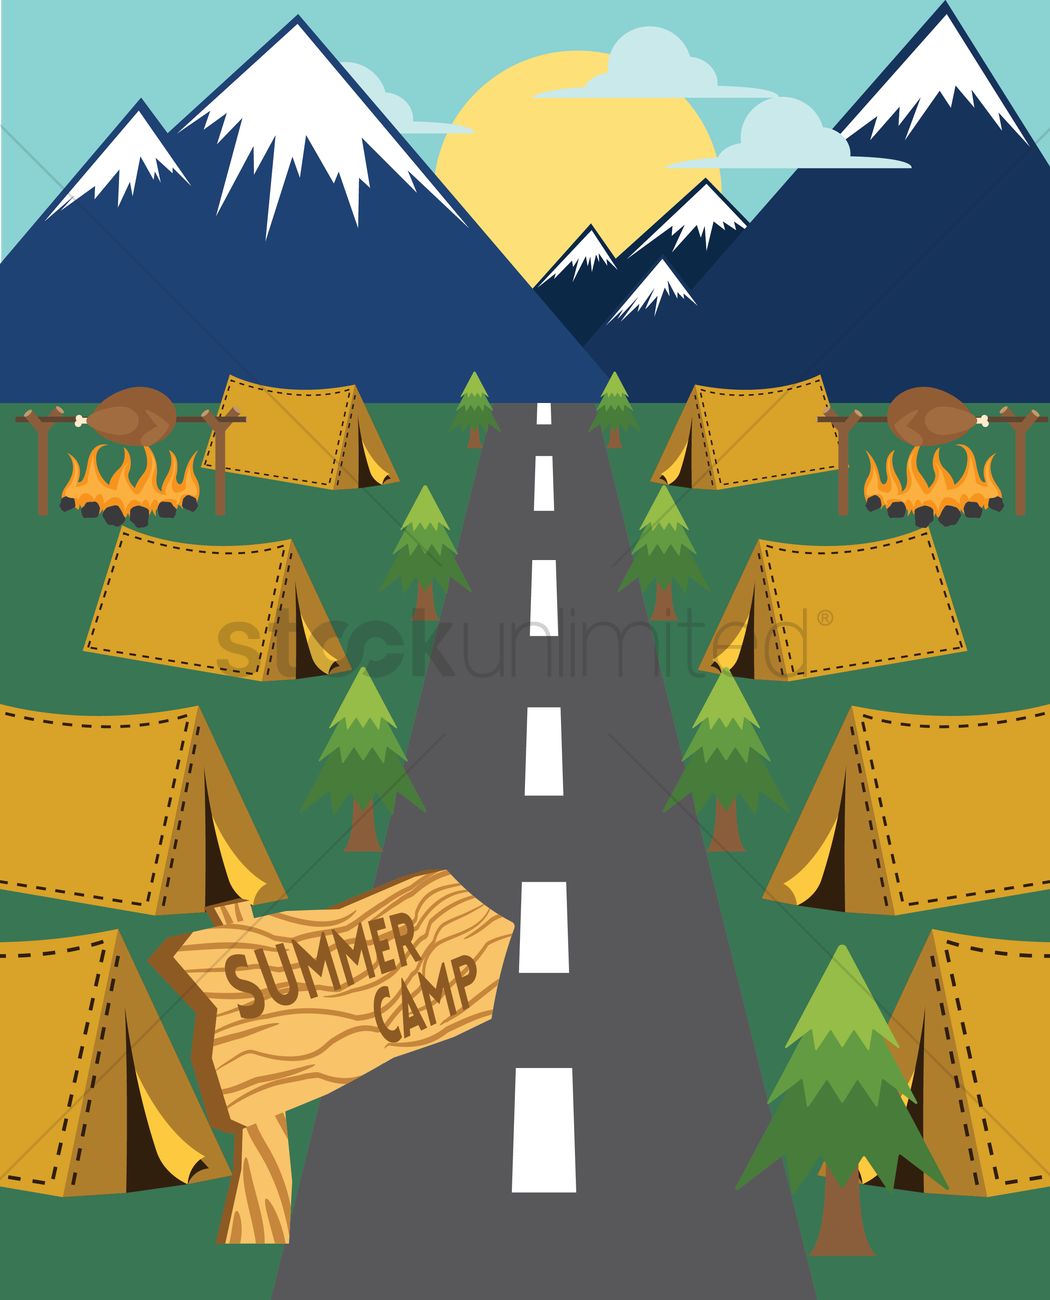 Summer camp wallpaper vector image